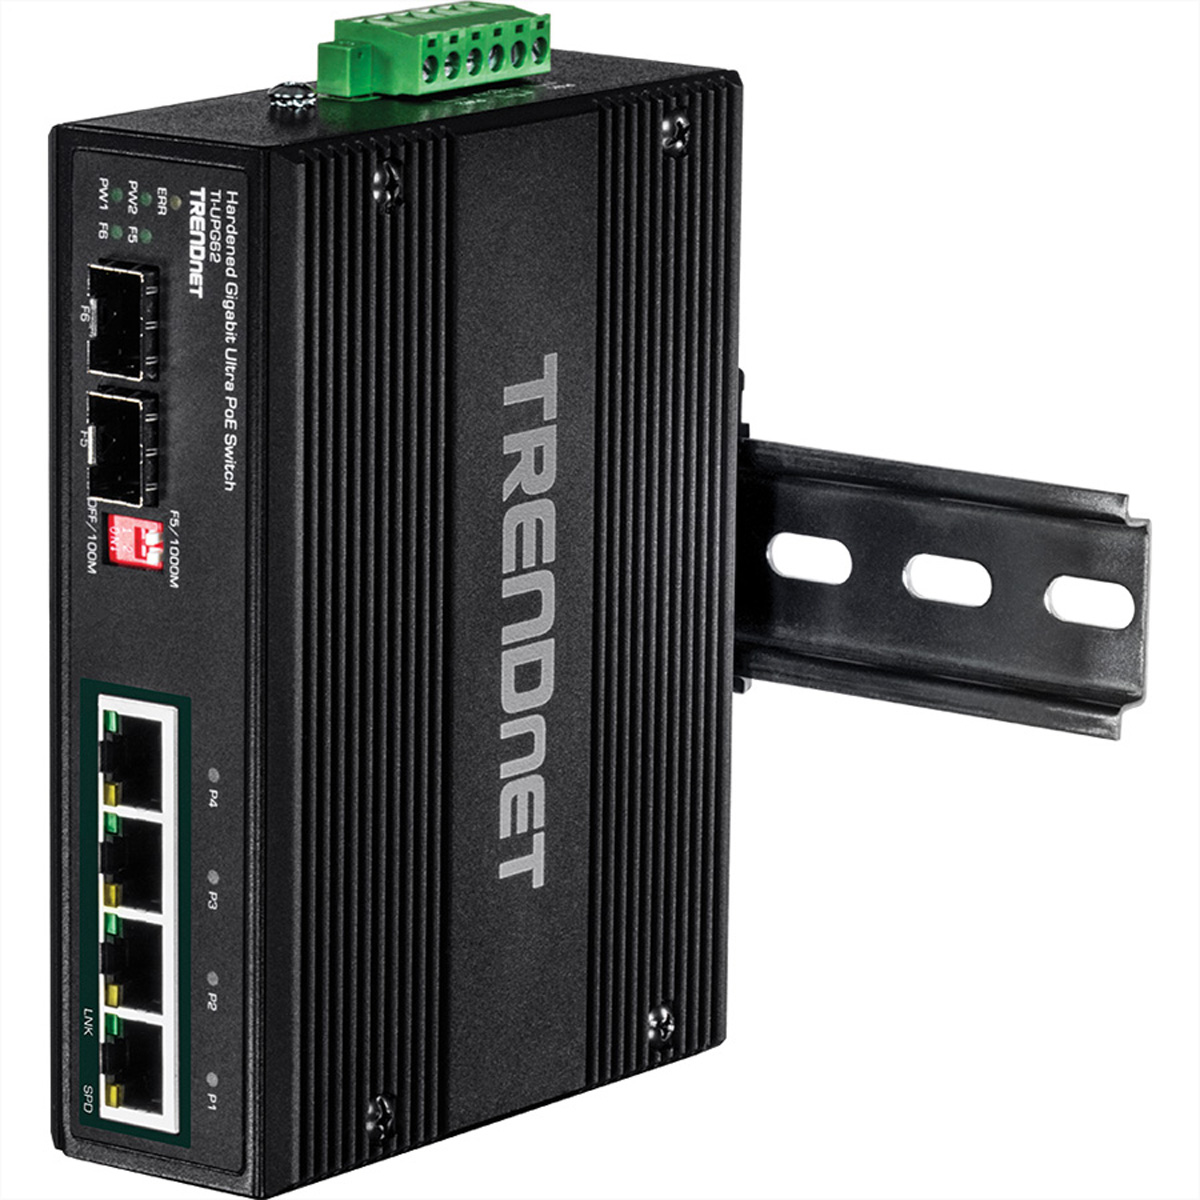 TRENDNET TI-UPG62 PoE Gigabit Switch Industrial PoE Gigabit Switch Ultra DIN-Rail 6-Port